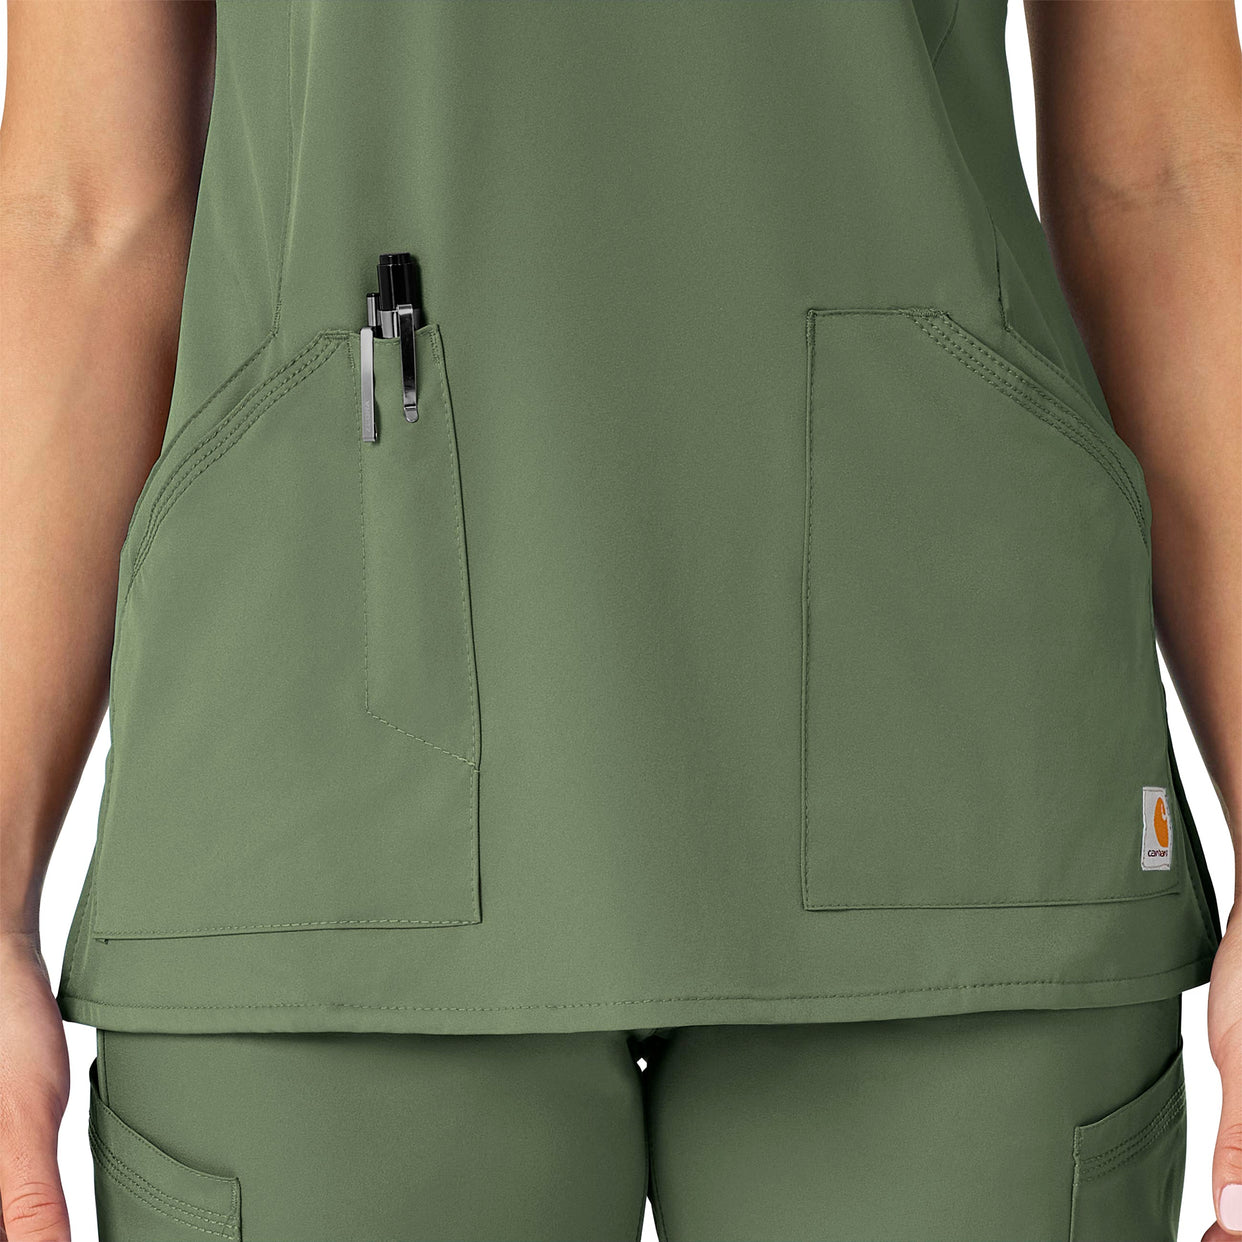 Force Liberty Women's Multi-Pocket V-Neck Scrub Top Olive front detail